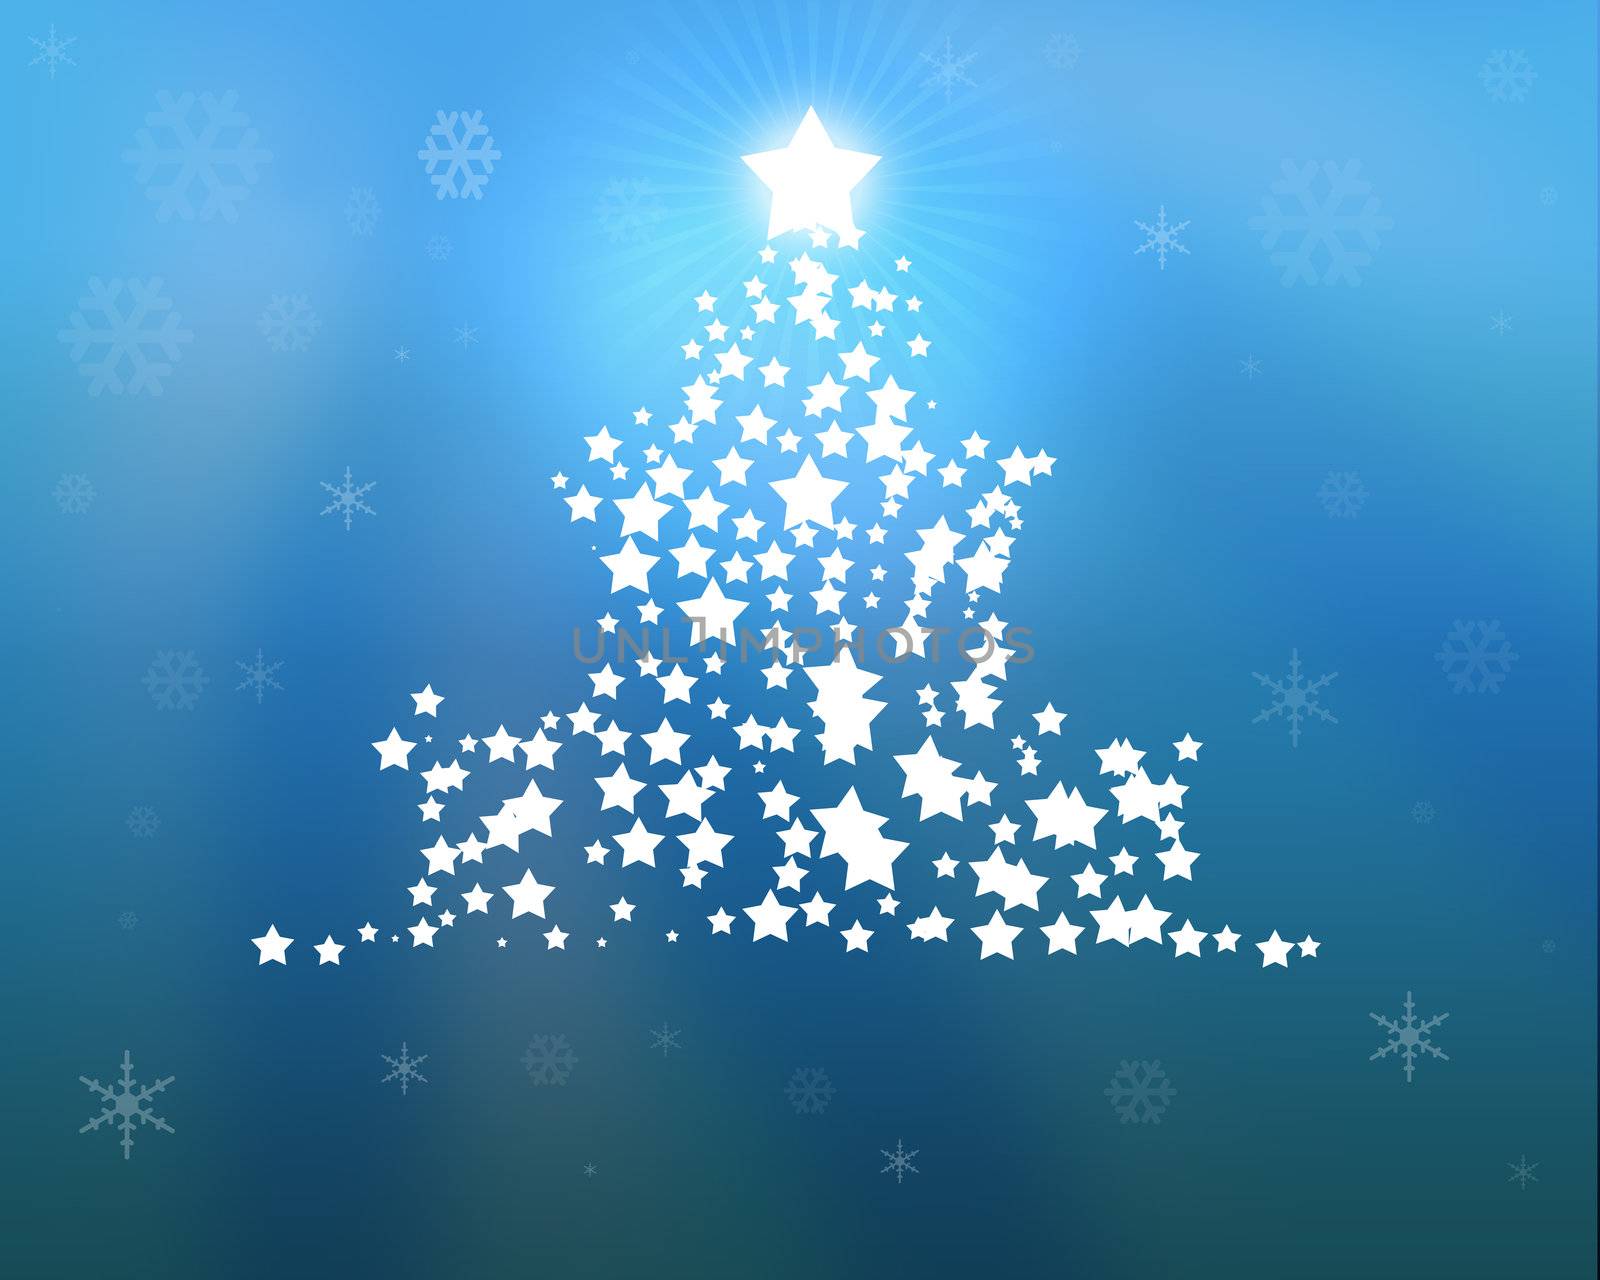 Blue Christmas - christmas illustration as vector digital high resolution
